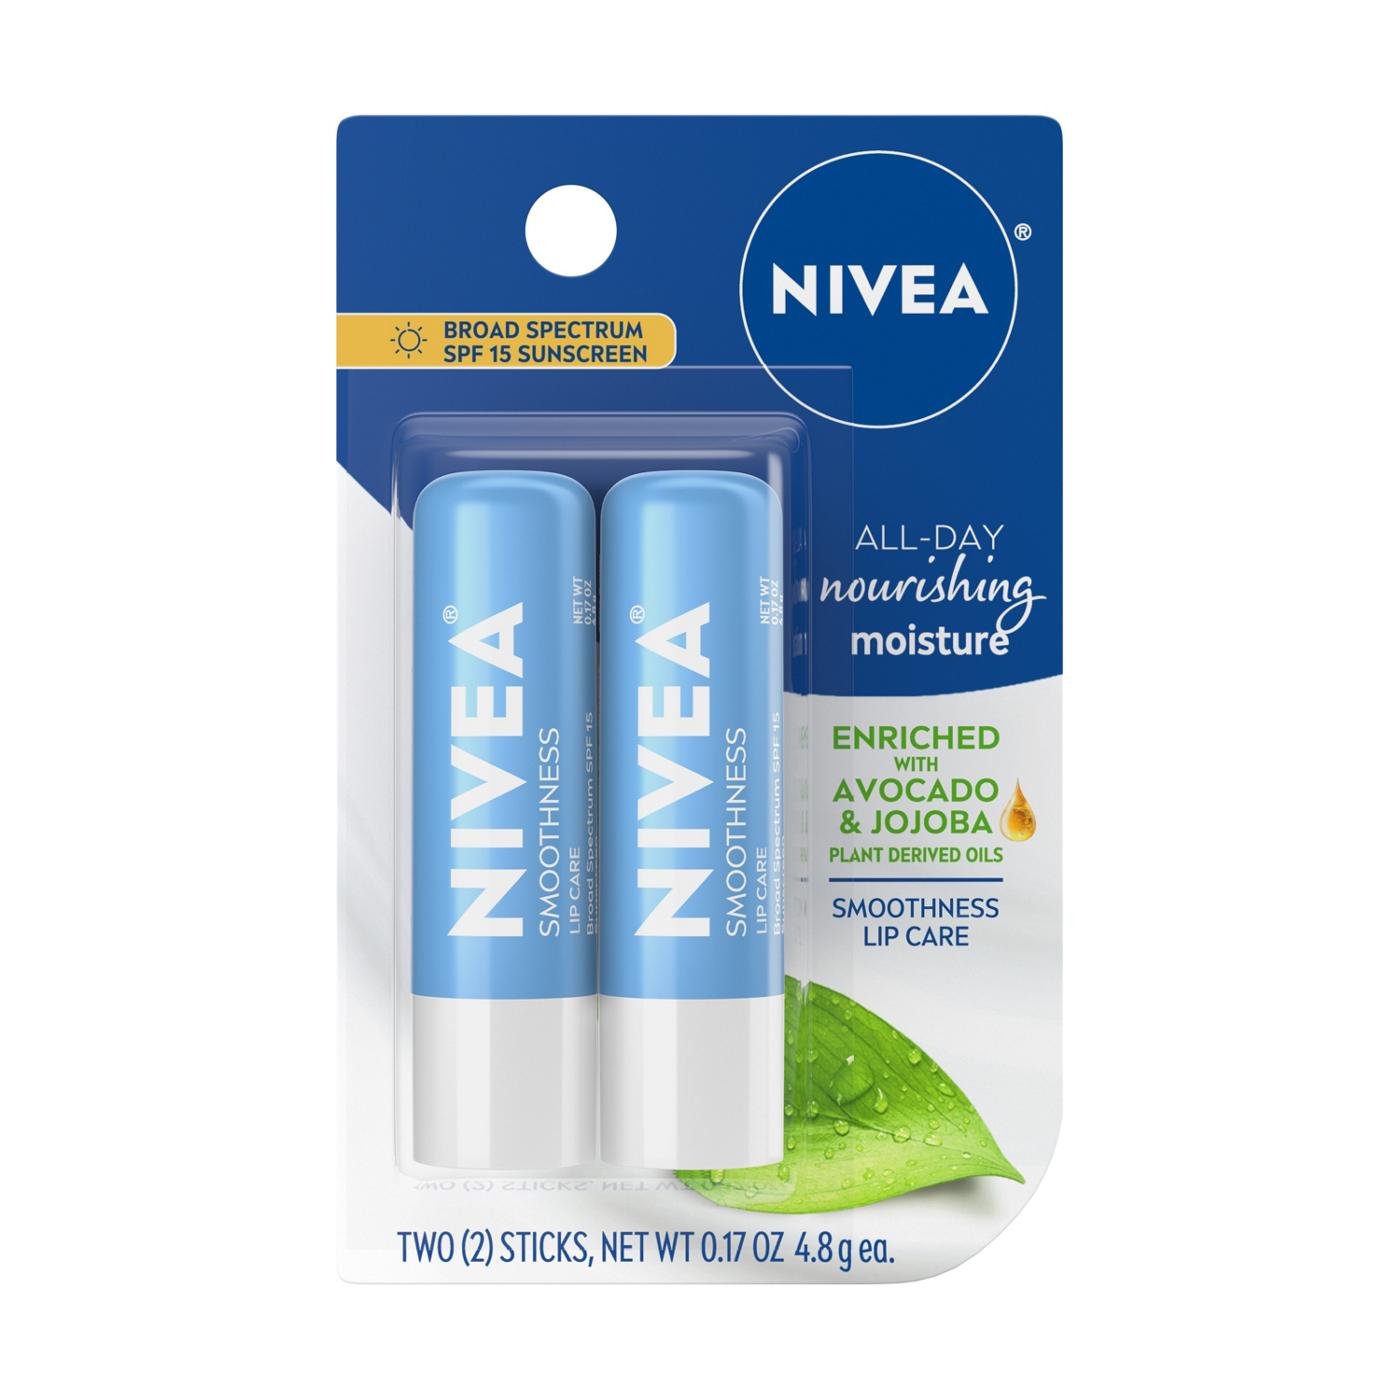 NIVEA Smoothness Lip Care; image 1 of 2